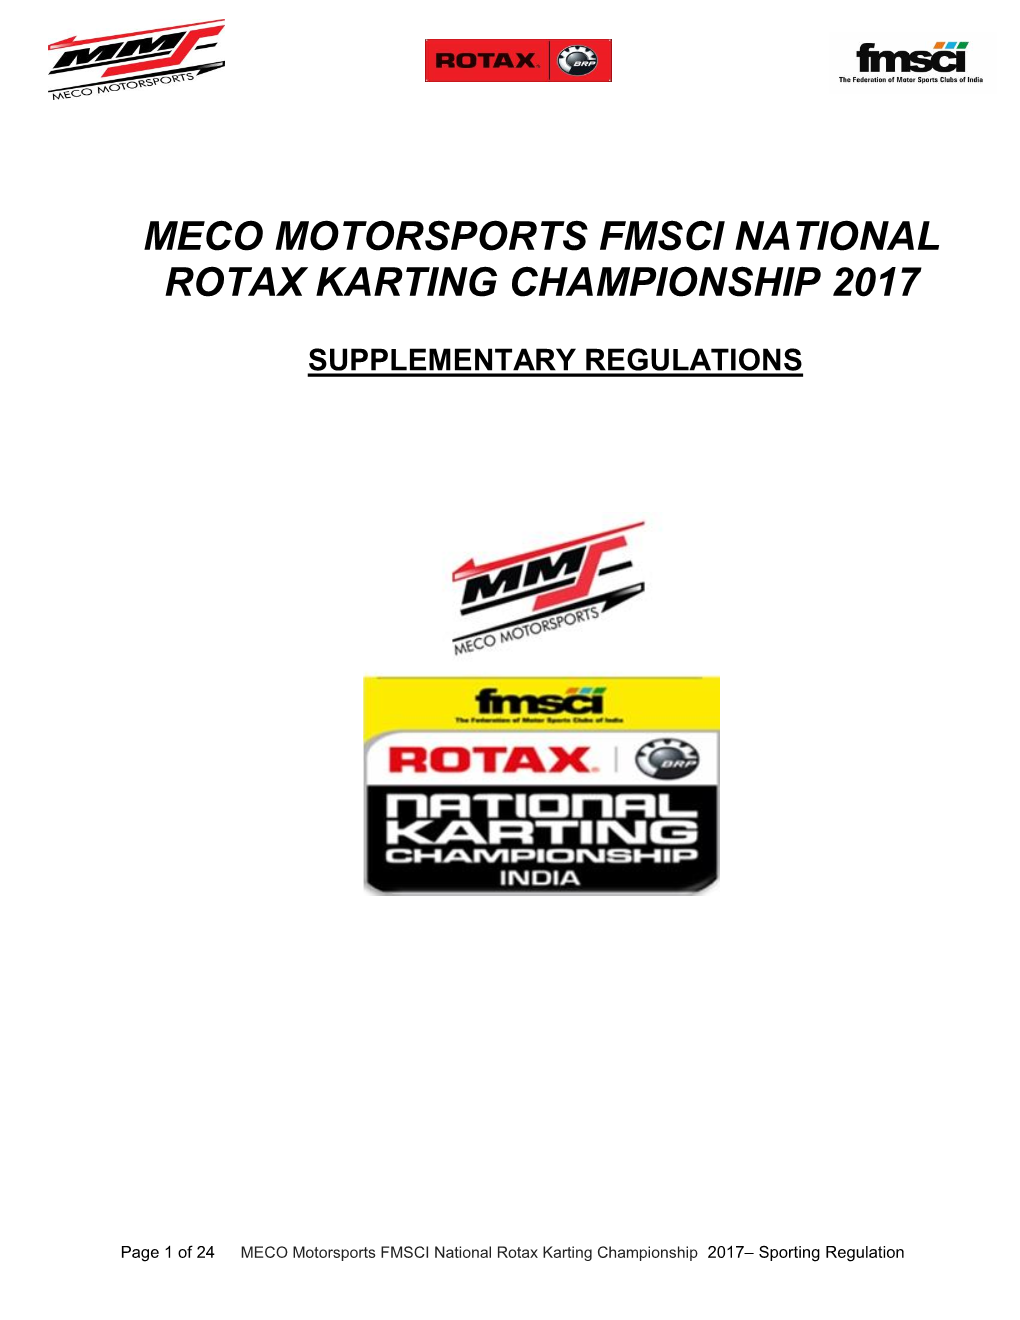 Meco Motorsports Fmsci National Rotax Karting Championship 2017